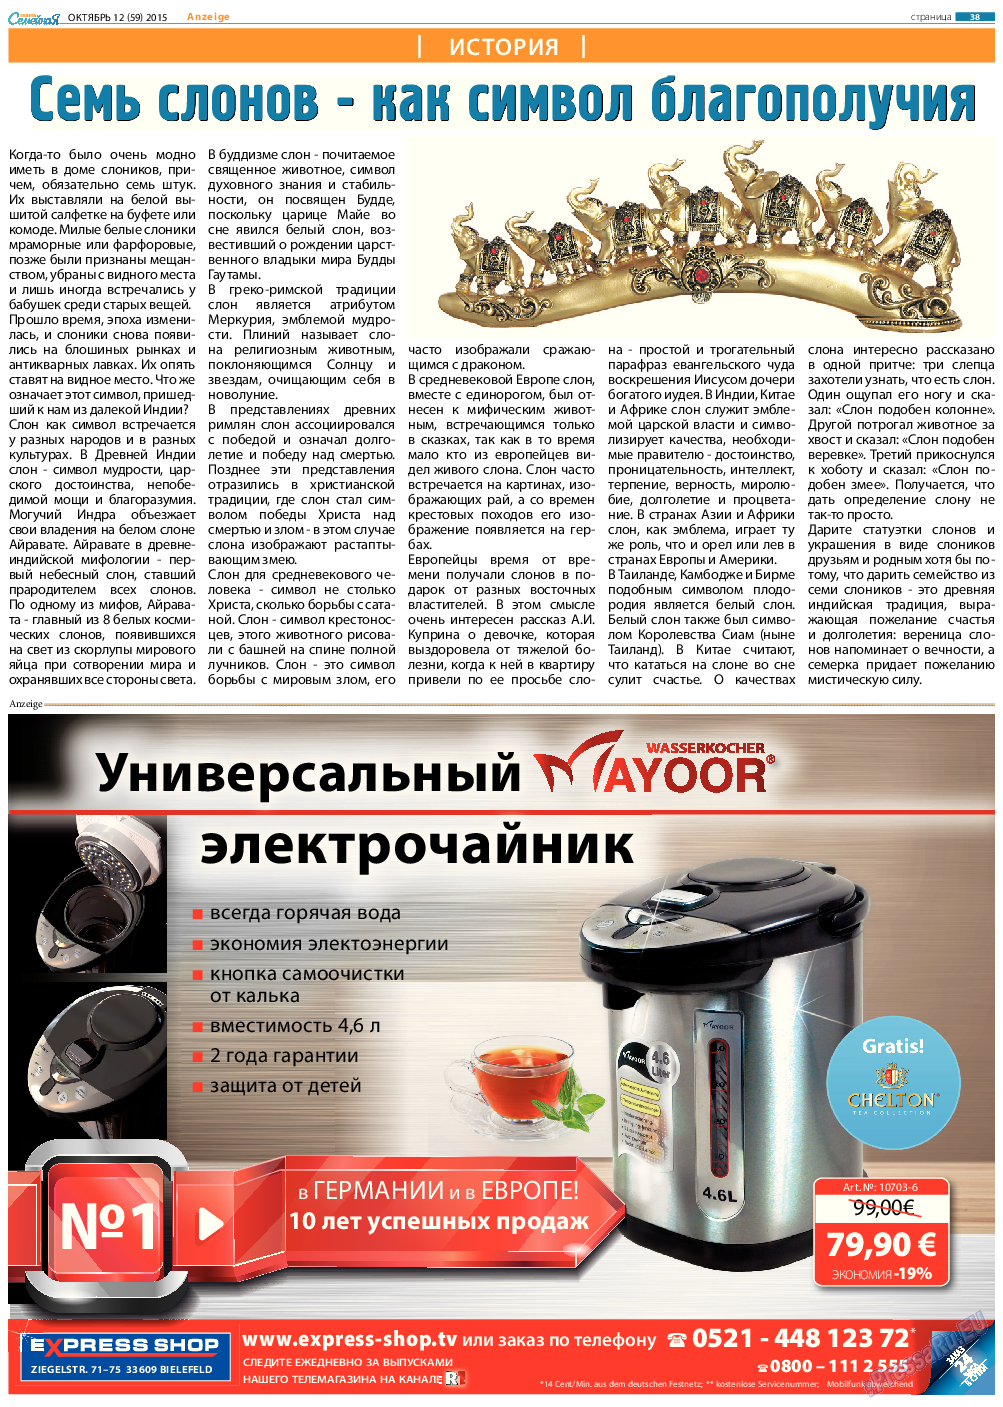 Семейная газета, газета. 2015 №12 стр.38